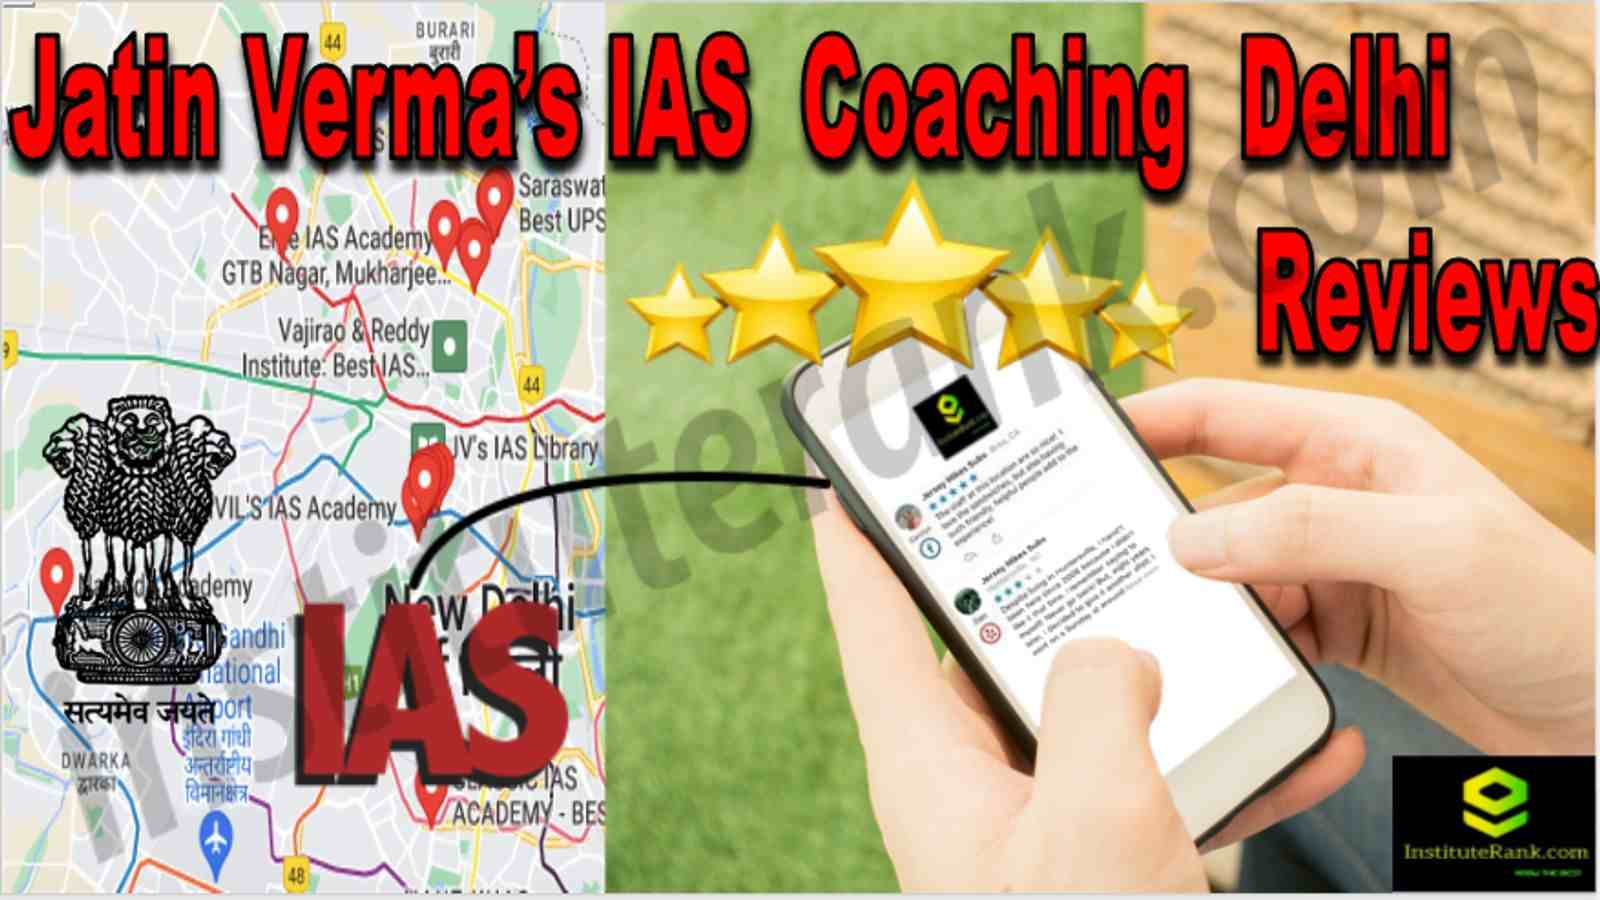 Jatin Verma’s IAS Coaching Delhi Reviews